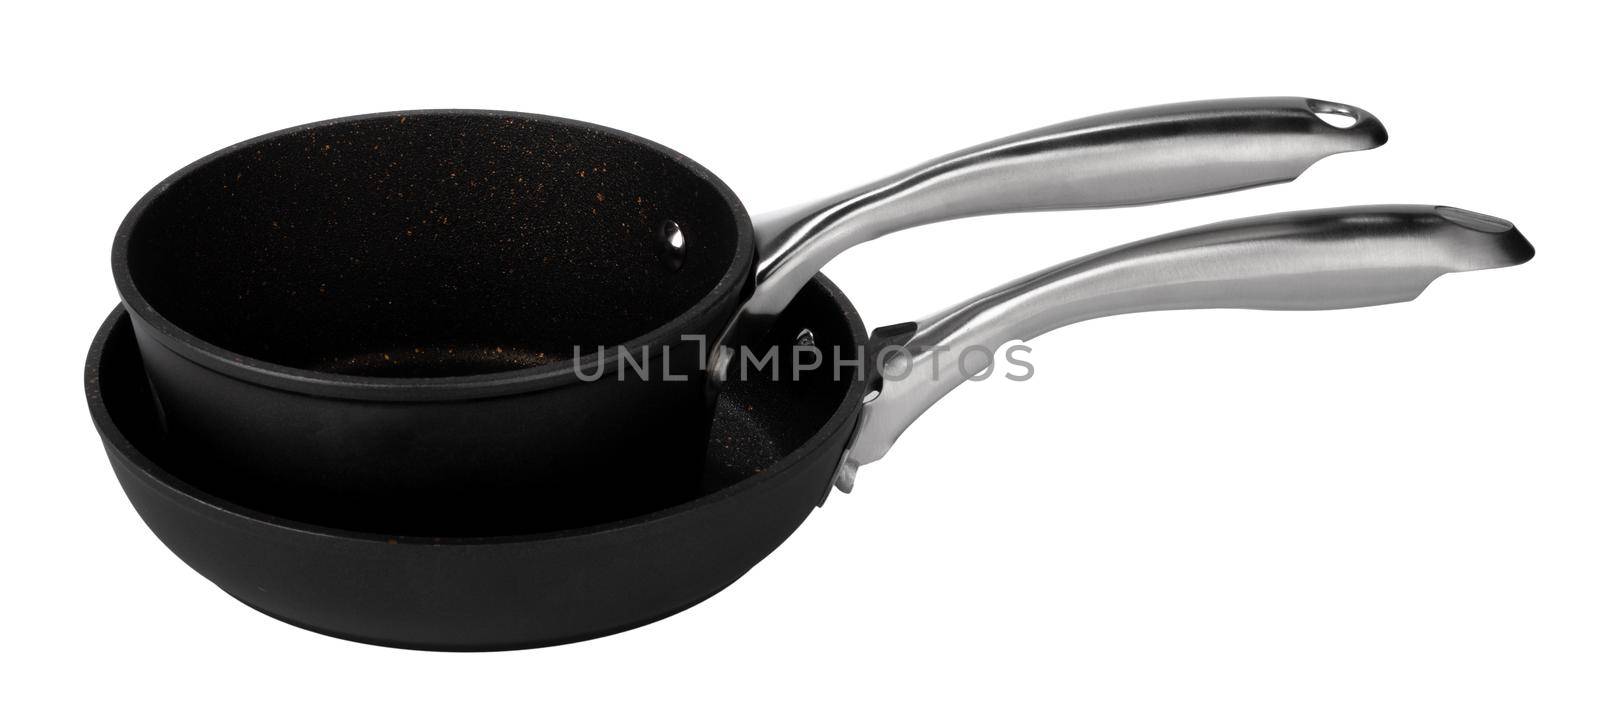 Set of new black pans isolated on white background